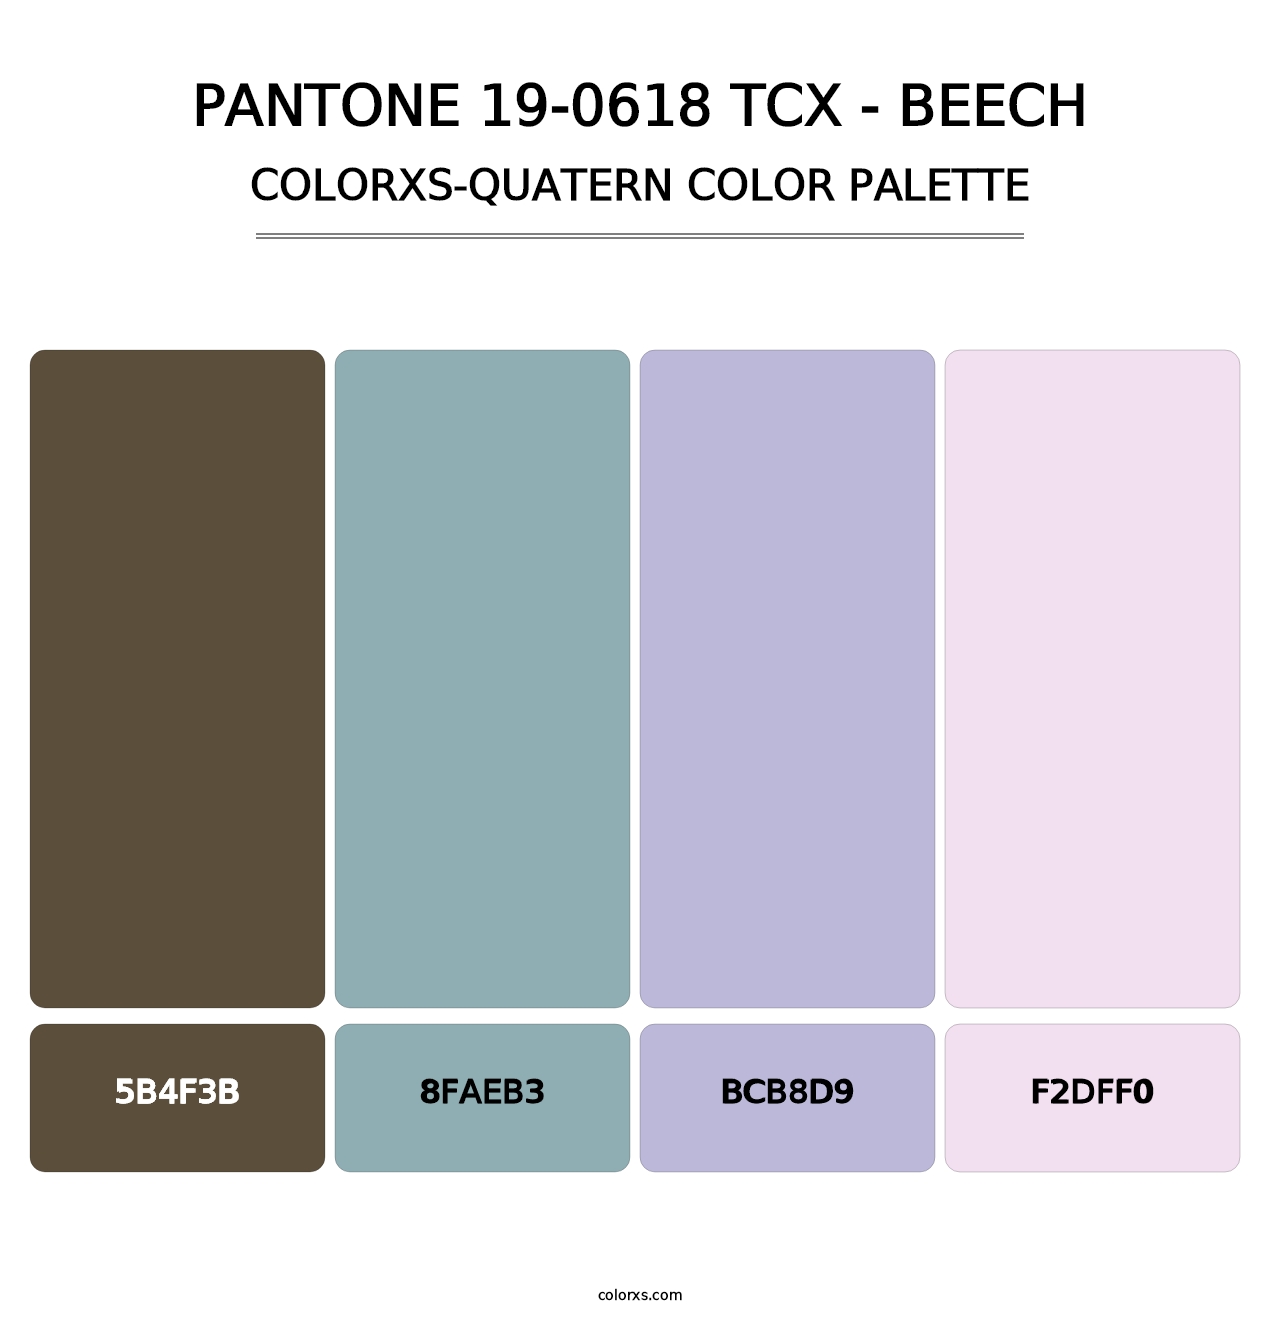 PANTONE 19-0618 TCX - Beech - Colorxs Quatern Palette